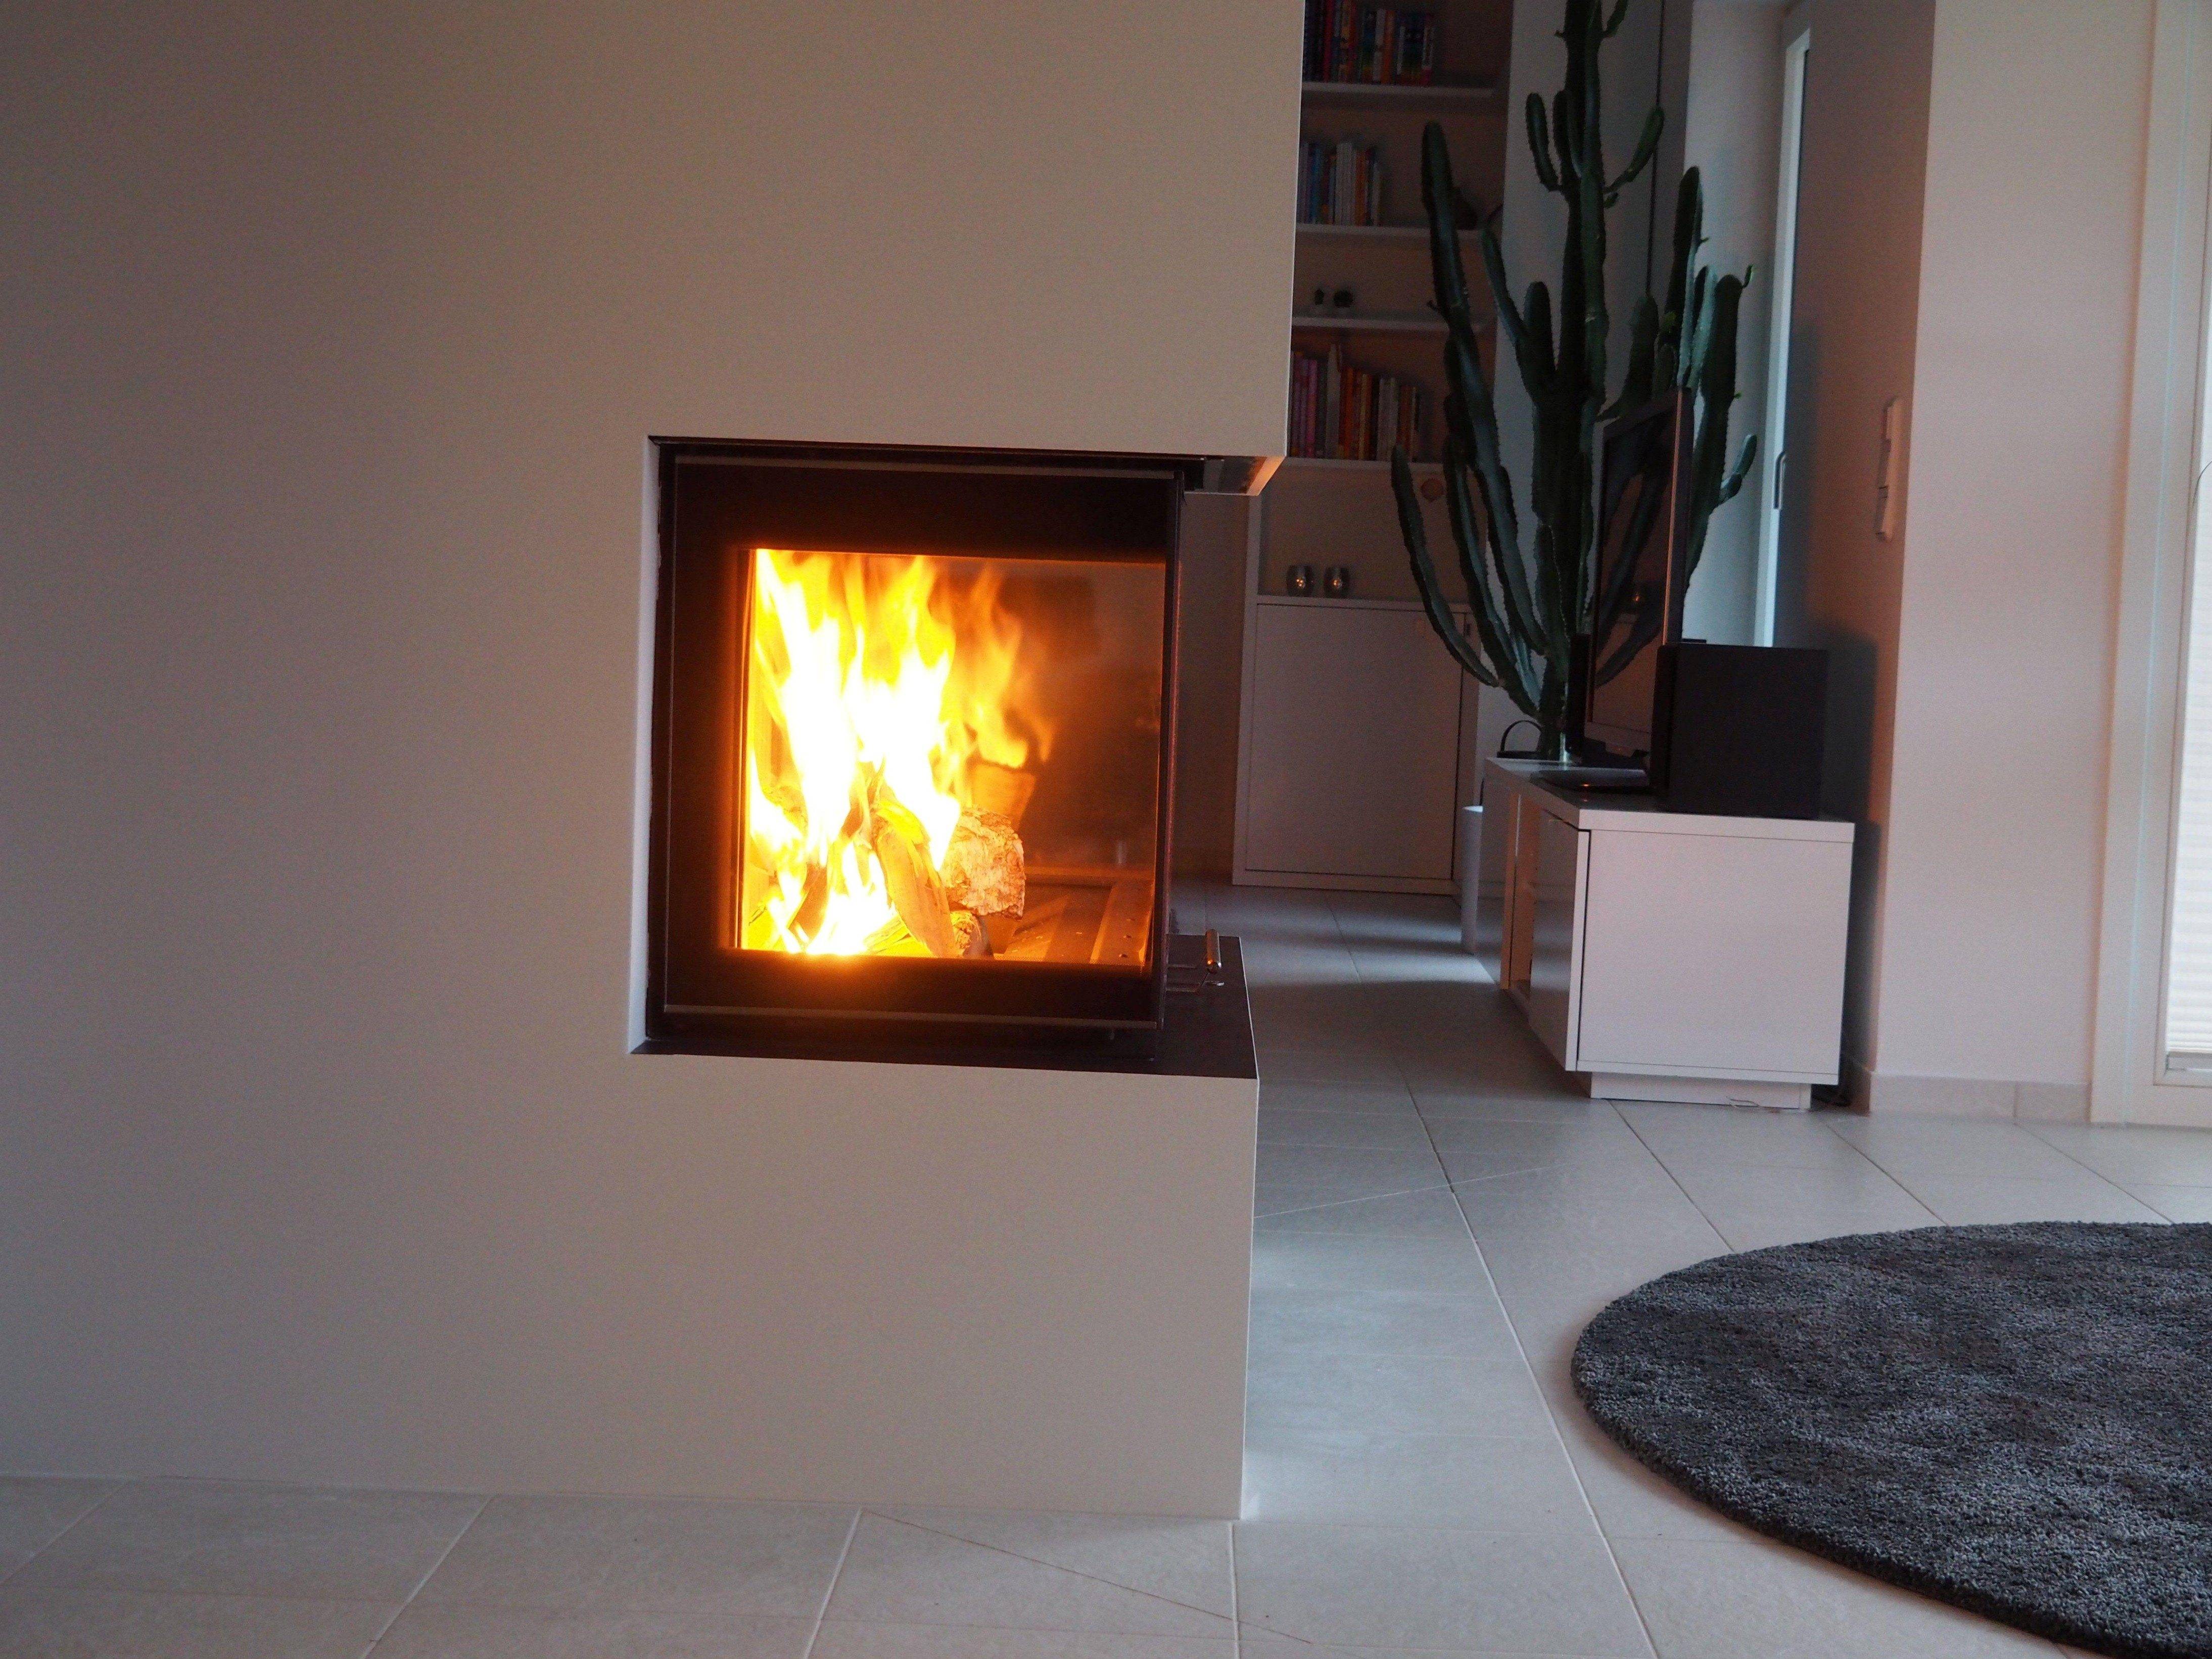 Fireplace Hearth Materials Fresh Fresh Wohnzimmerwand Modern Inspirations